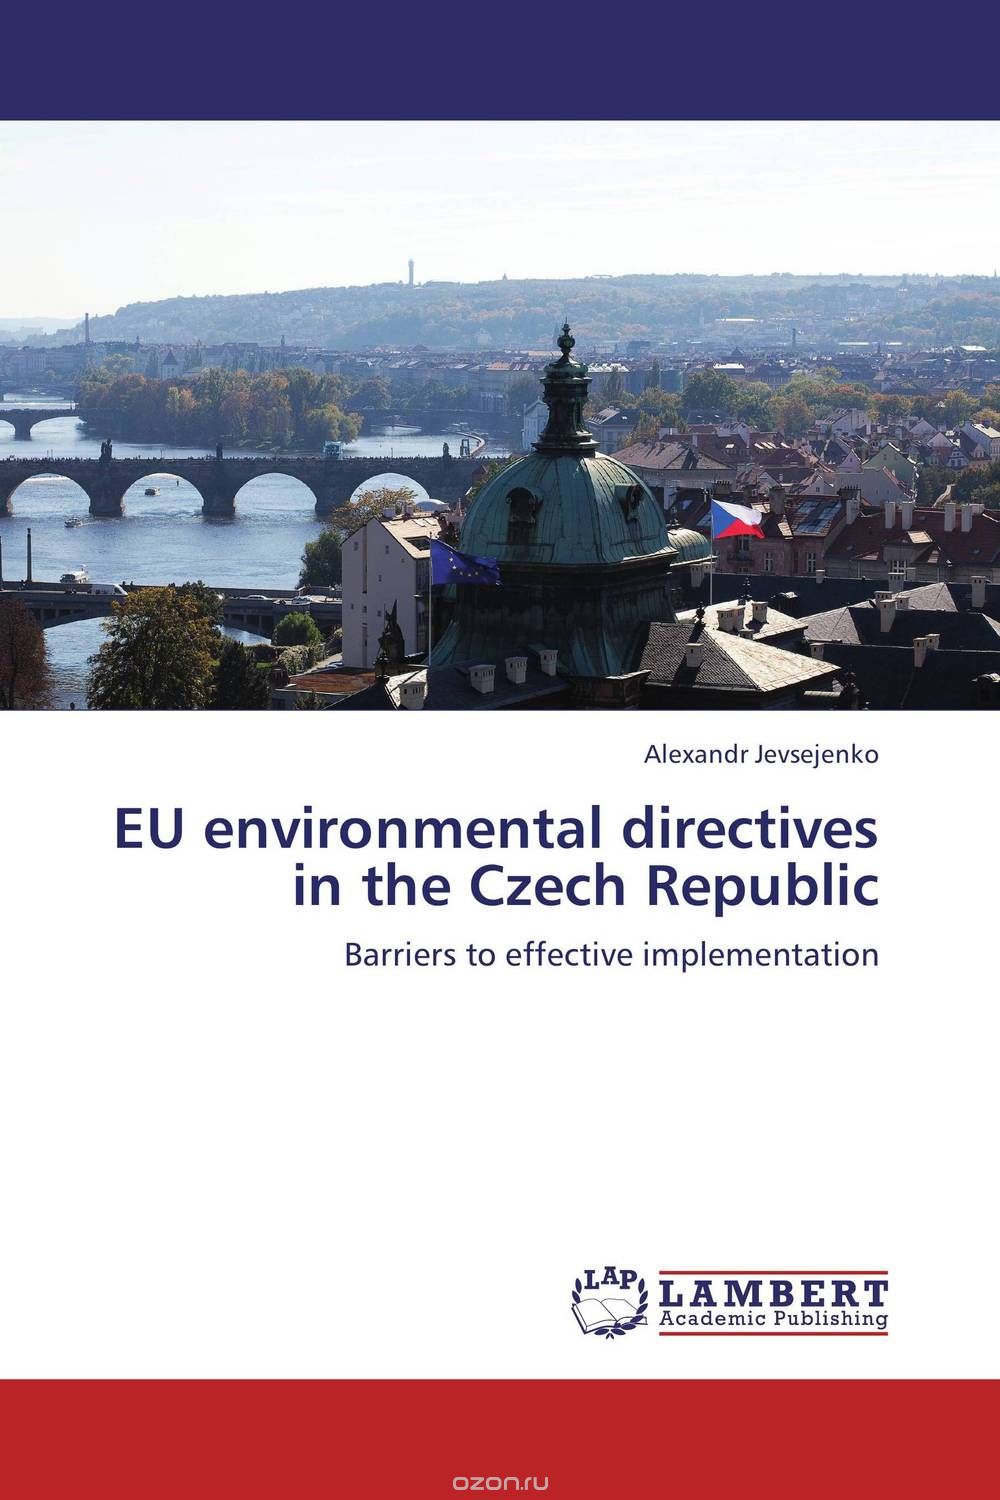 Скачать книгу "EU environmental directives  in the Czech Republic"